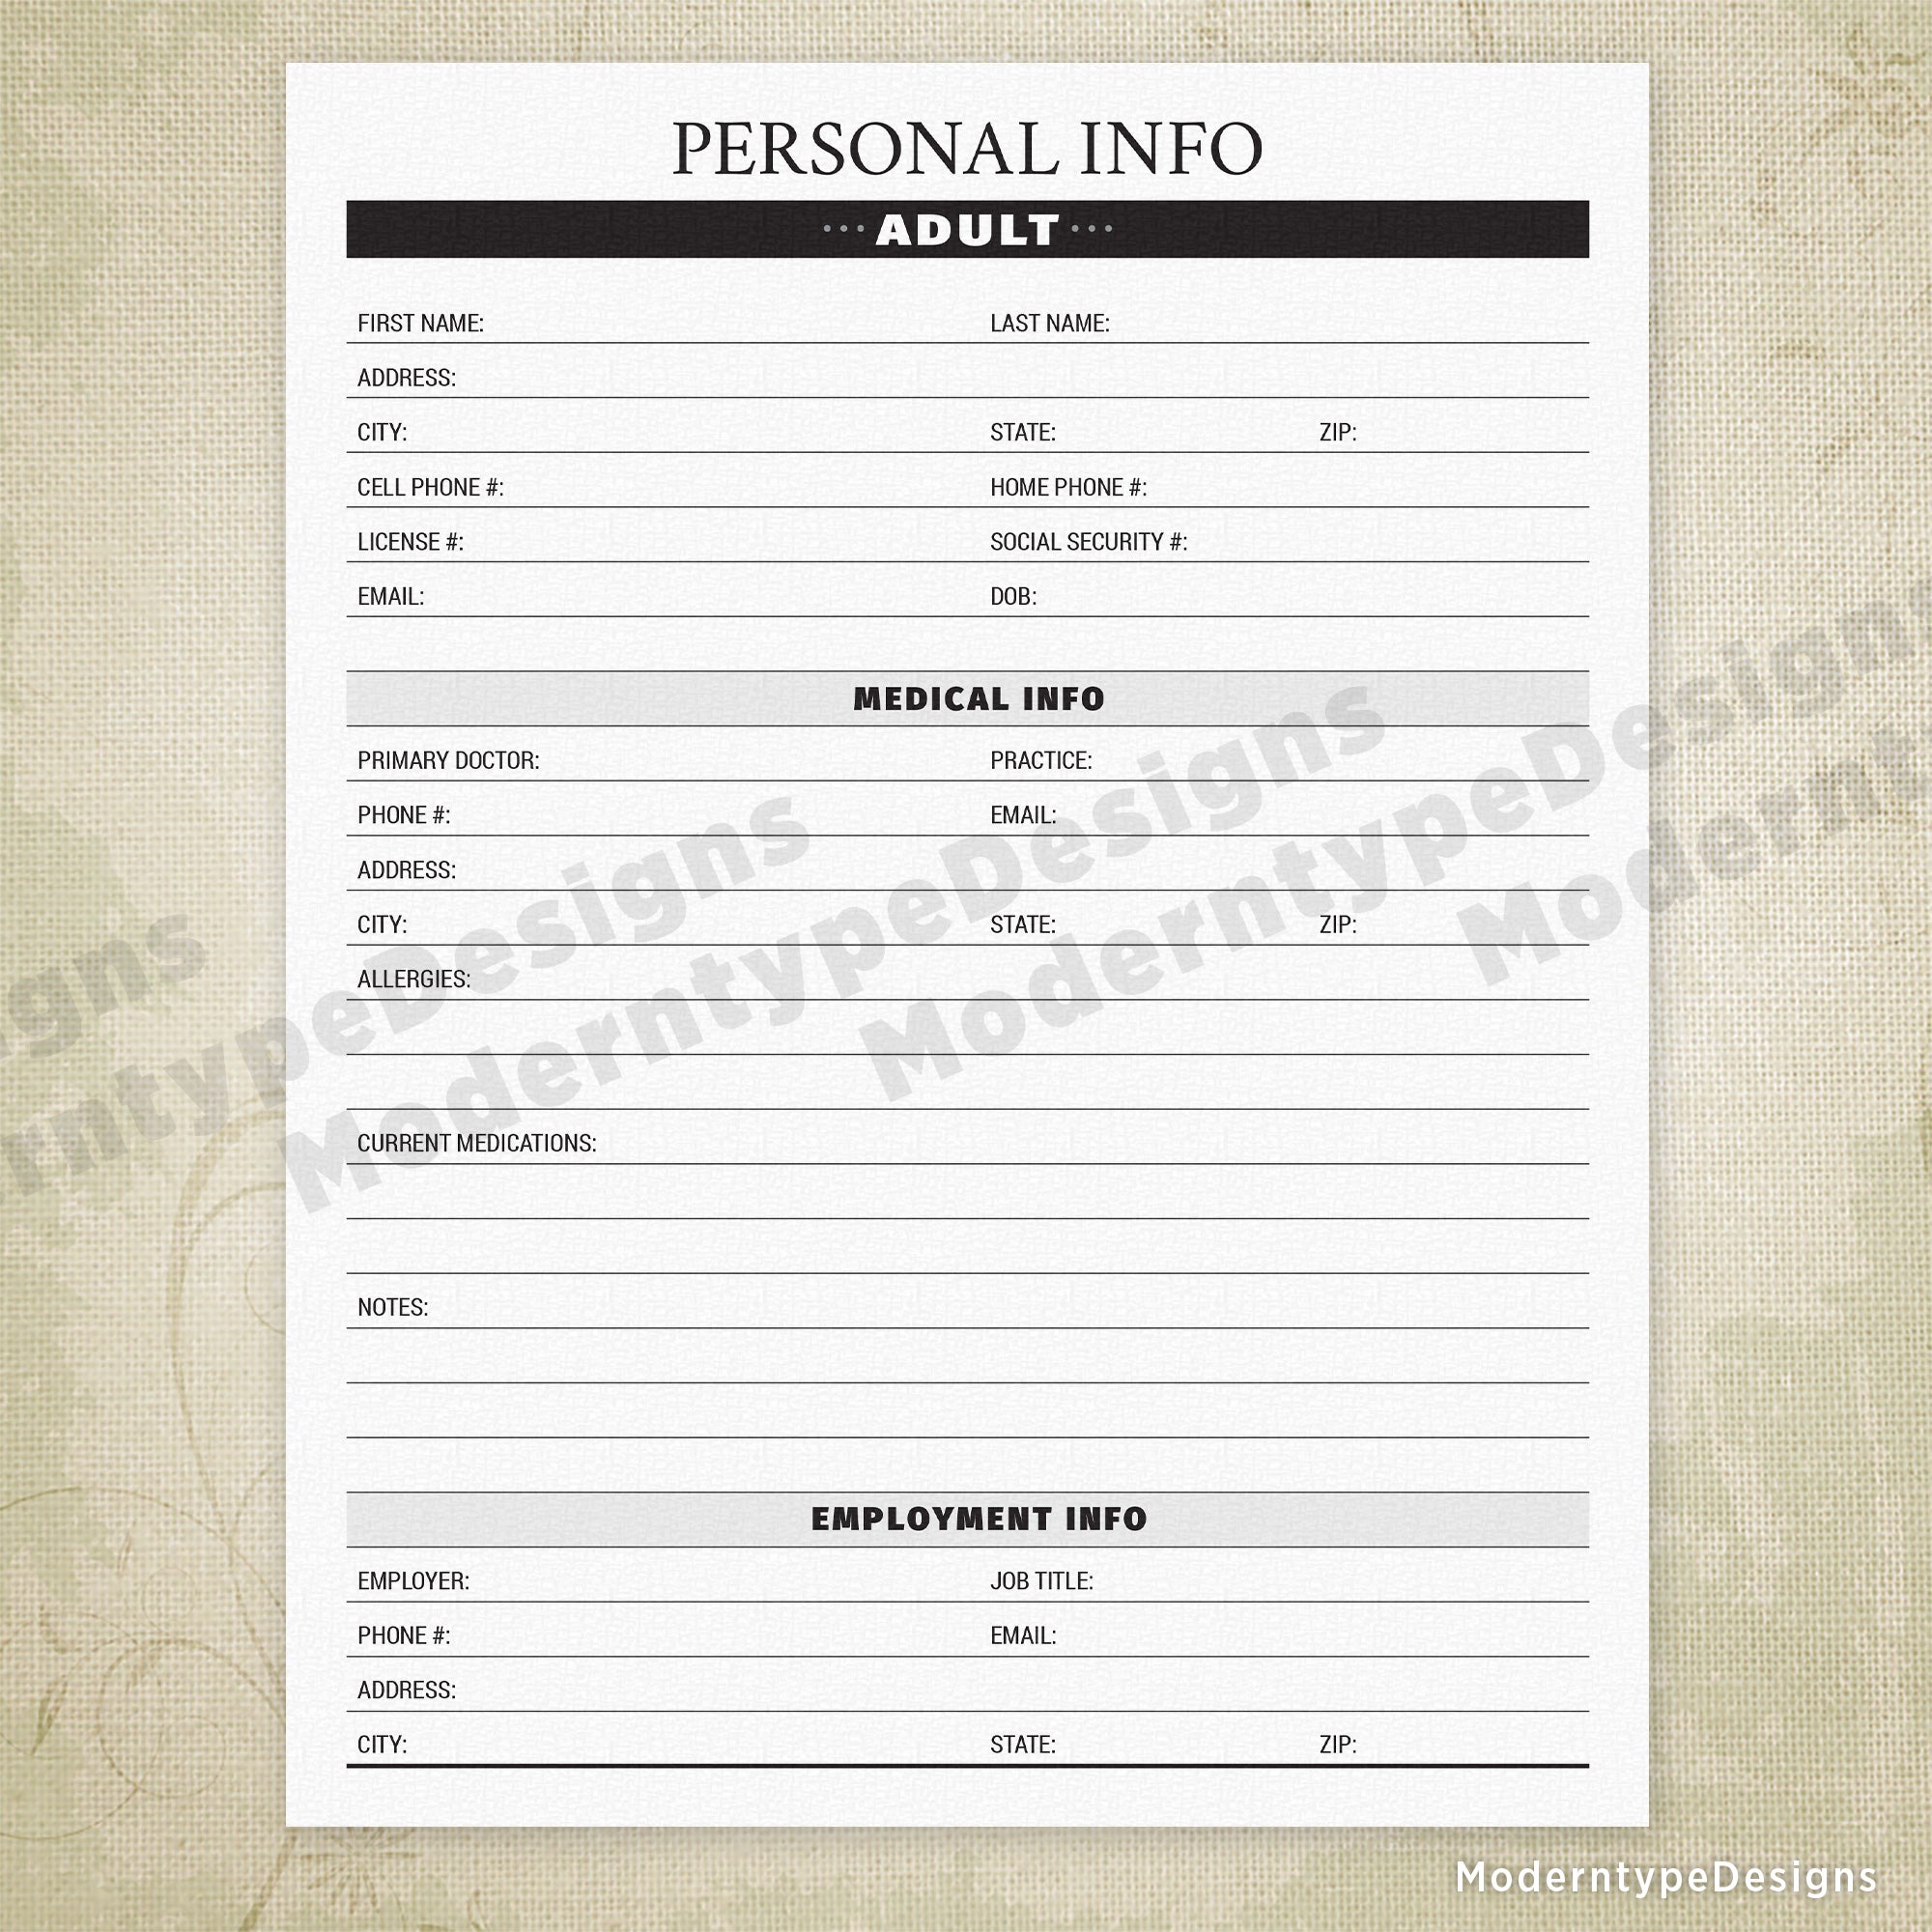 Personal Info Printable - End of Life